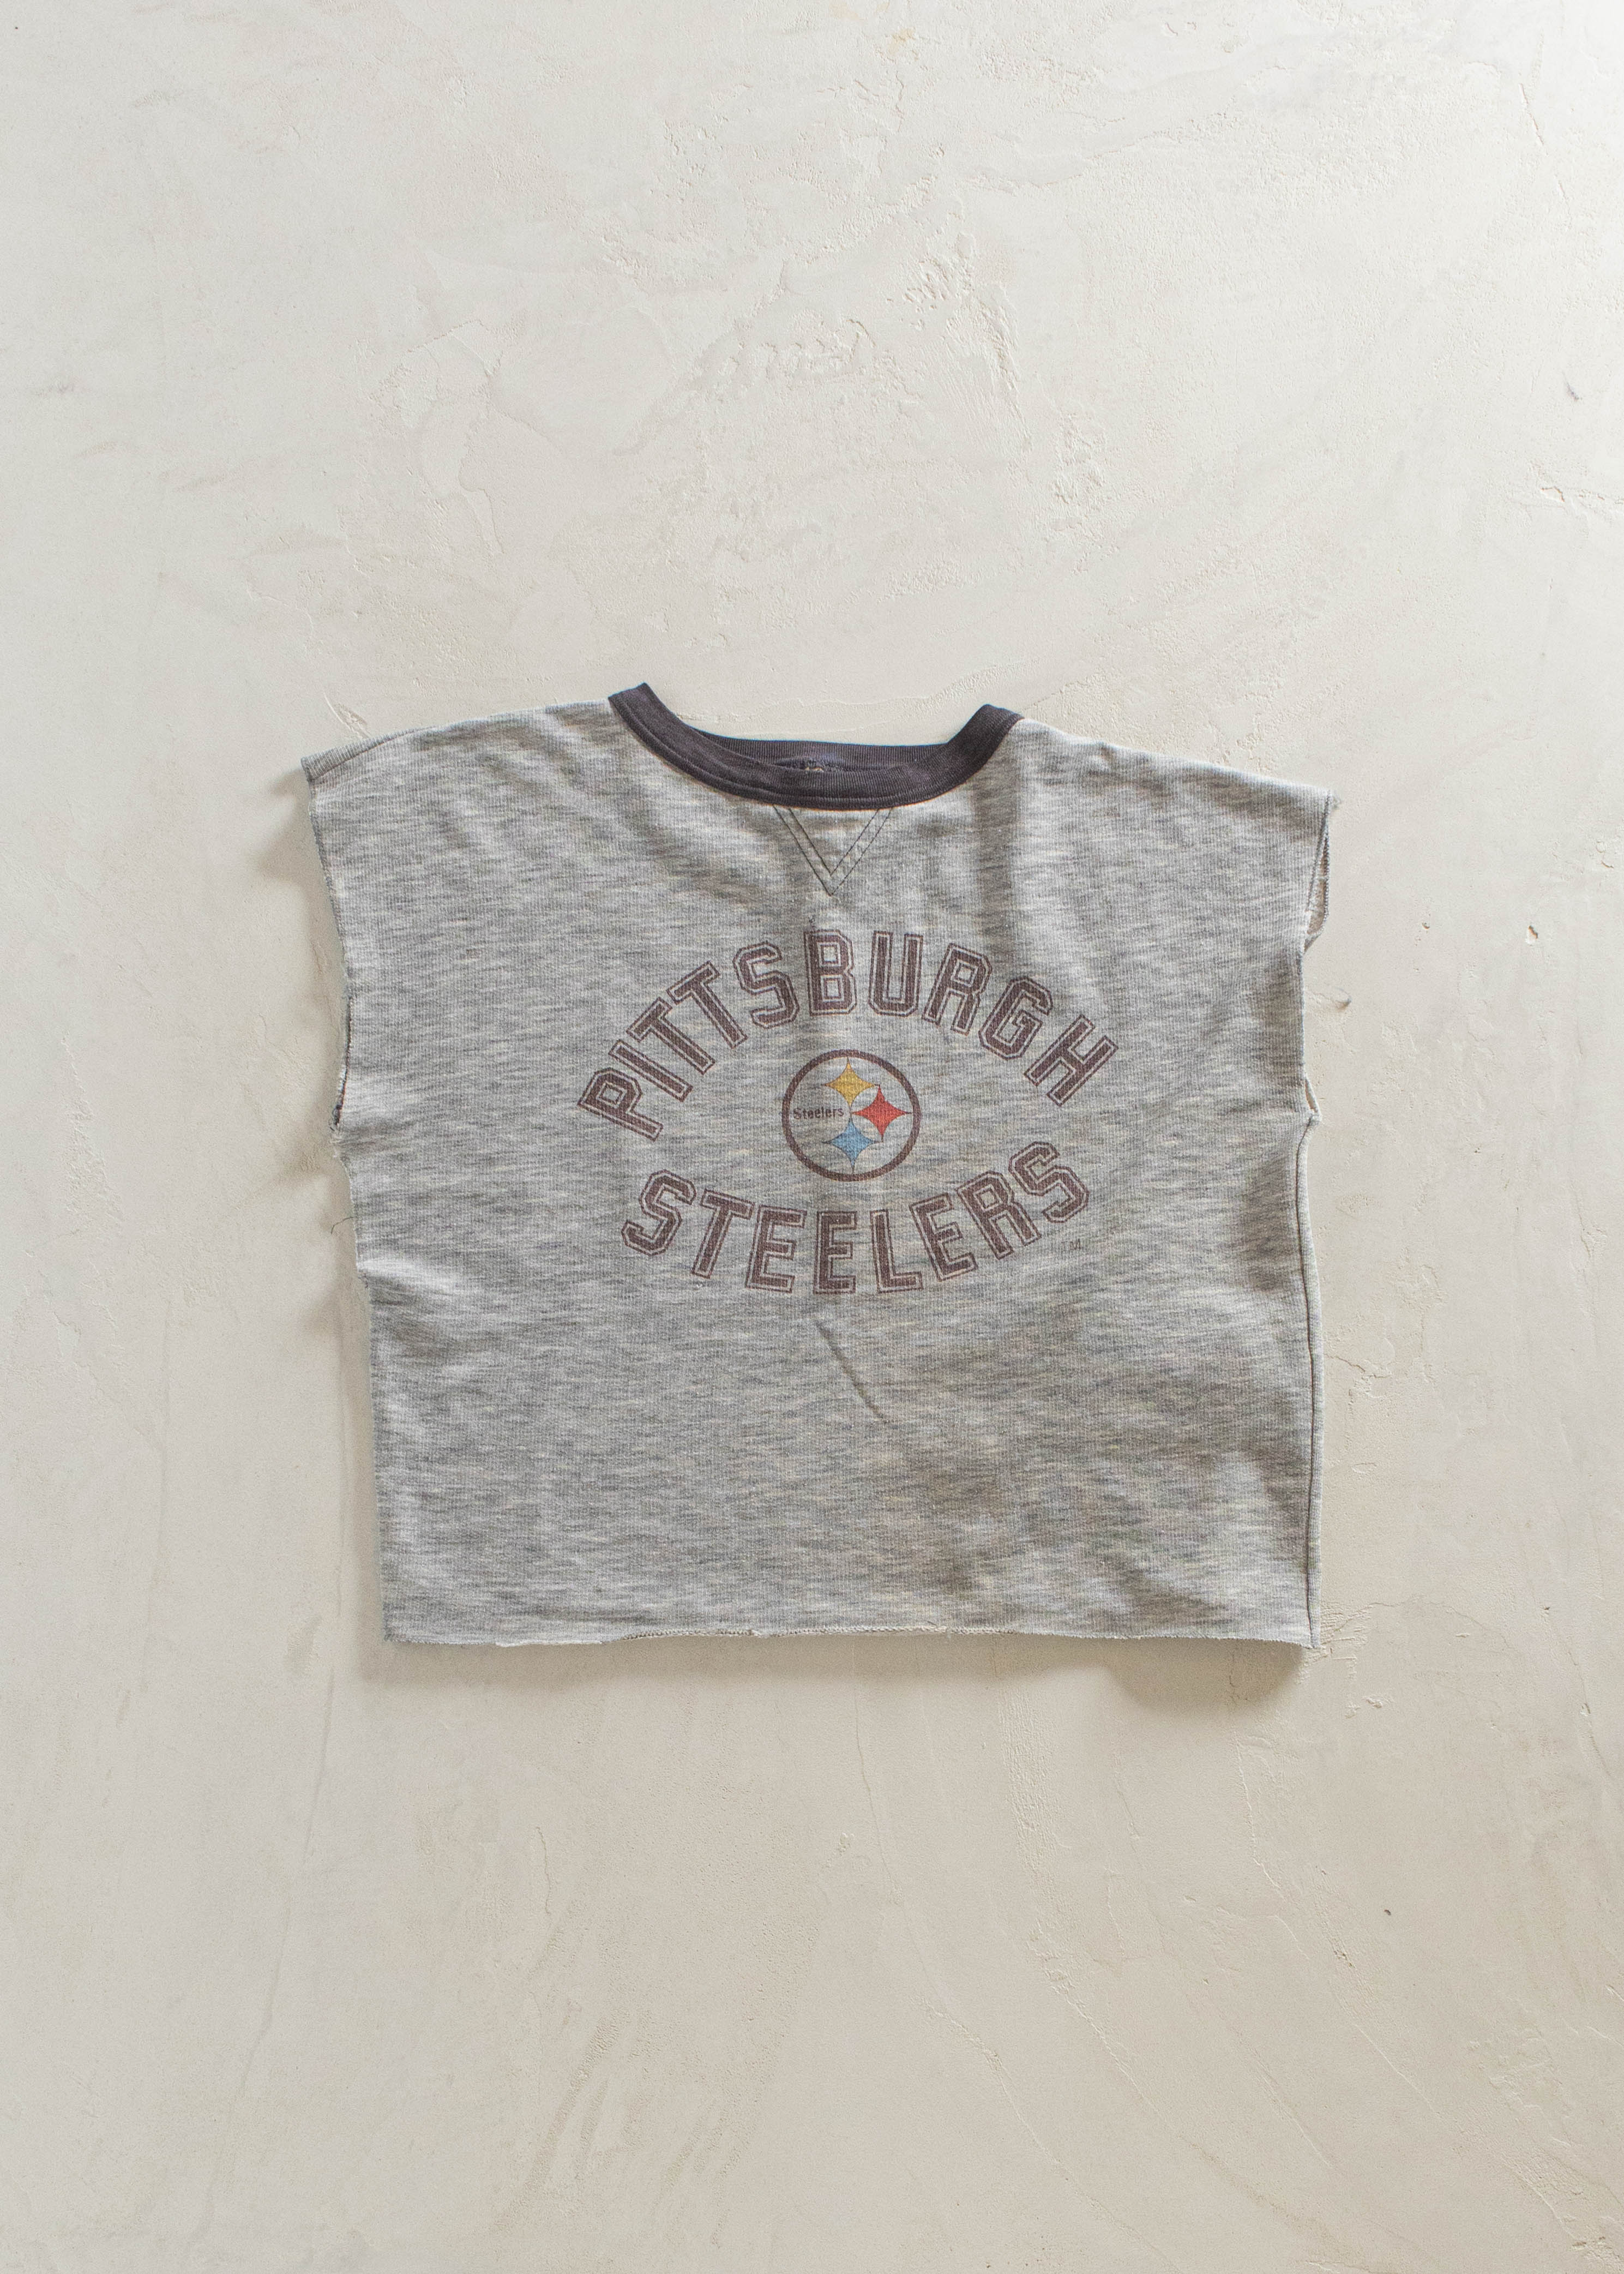 1980s Pittsburgh Steerlers Cut Off Sweatshirt Size S/M – Palmo Goods